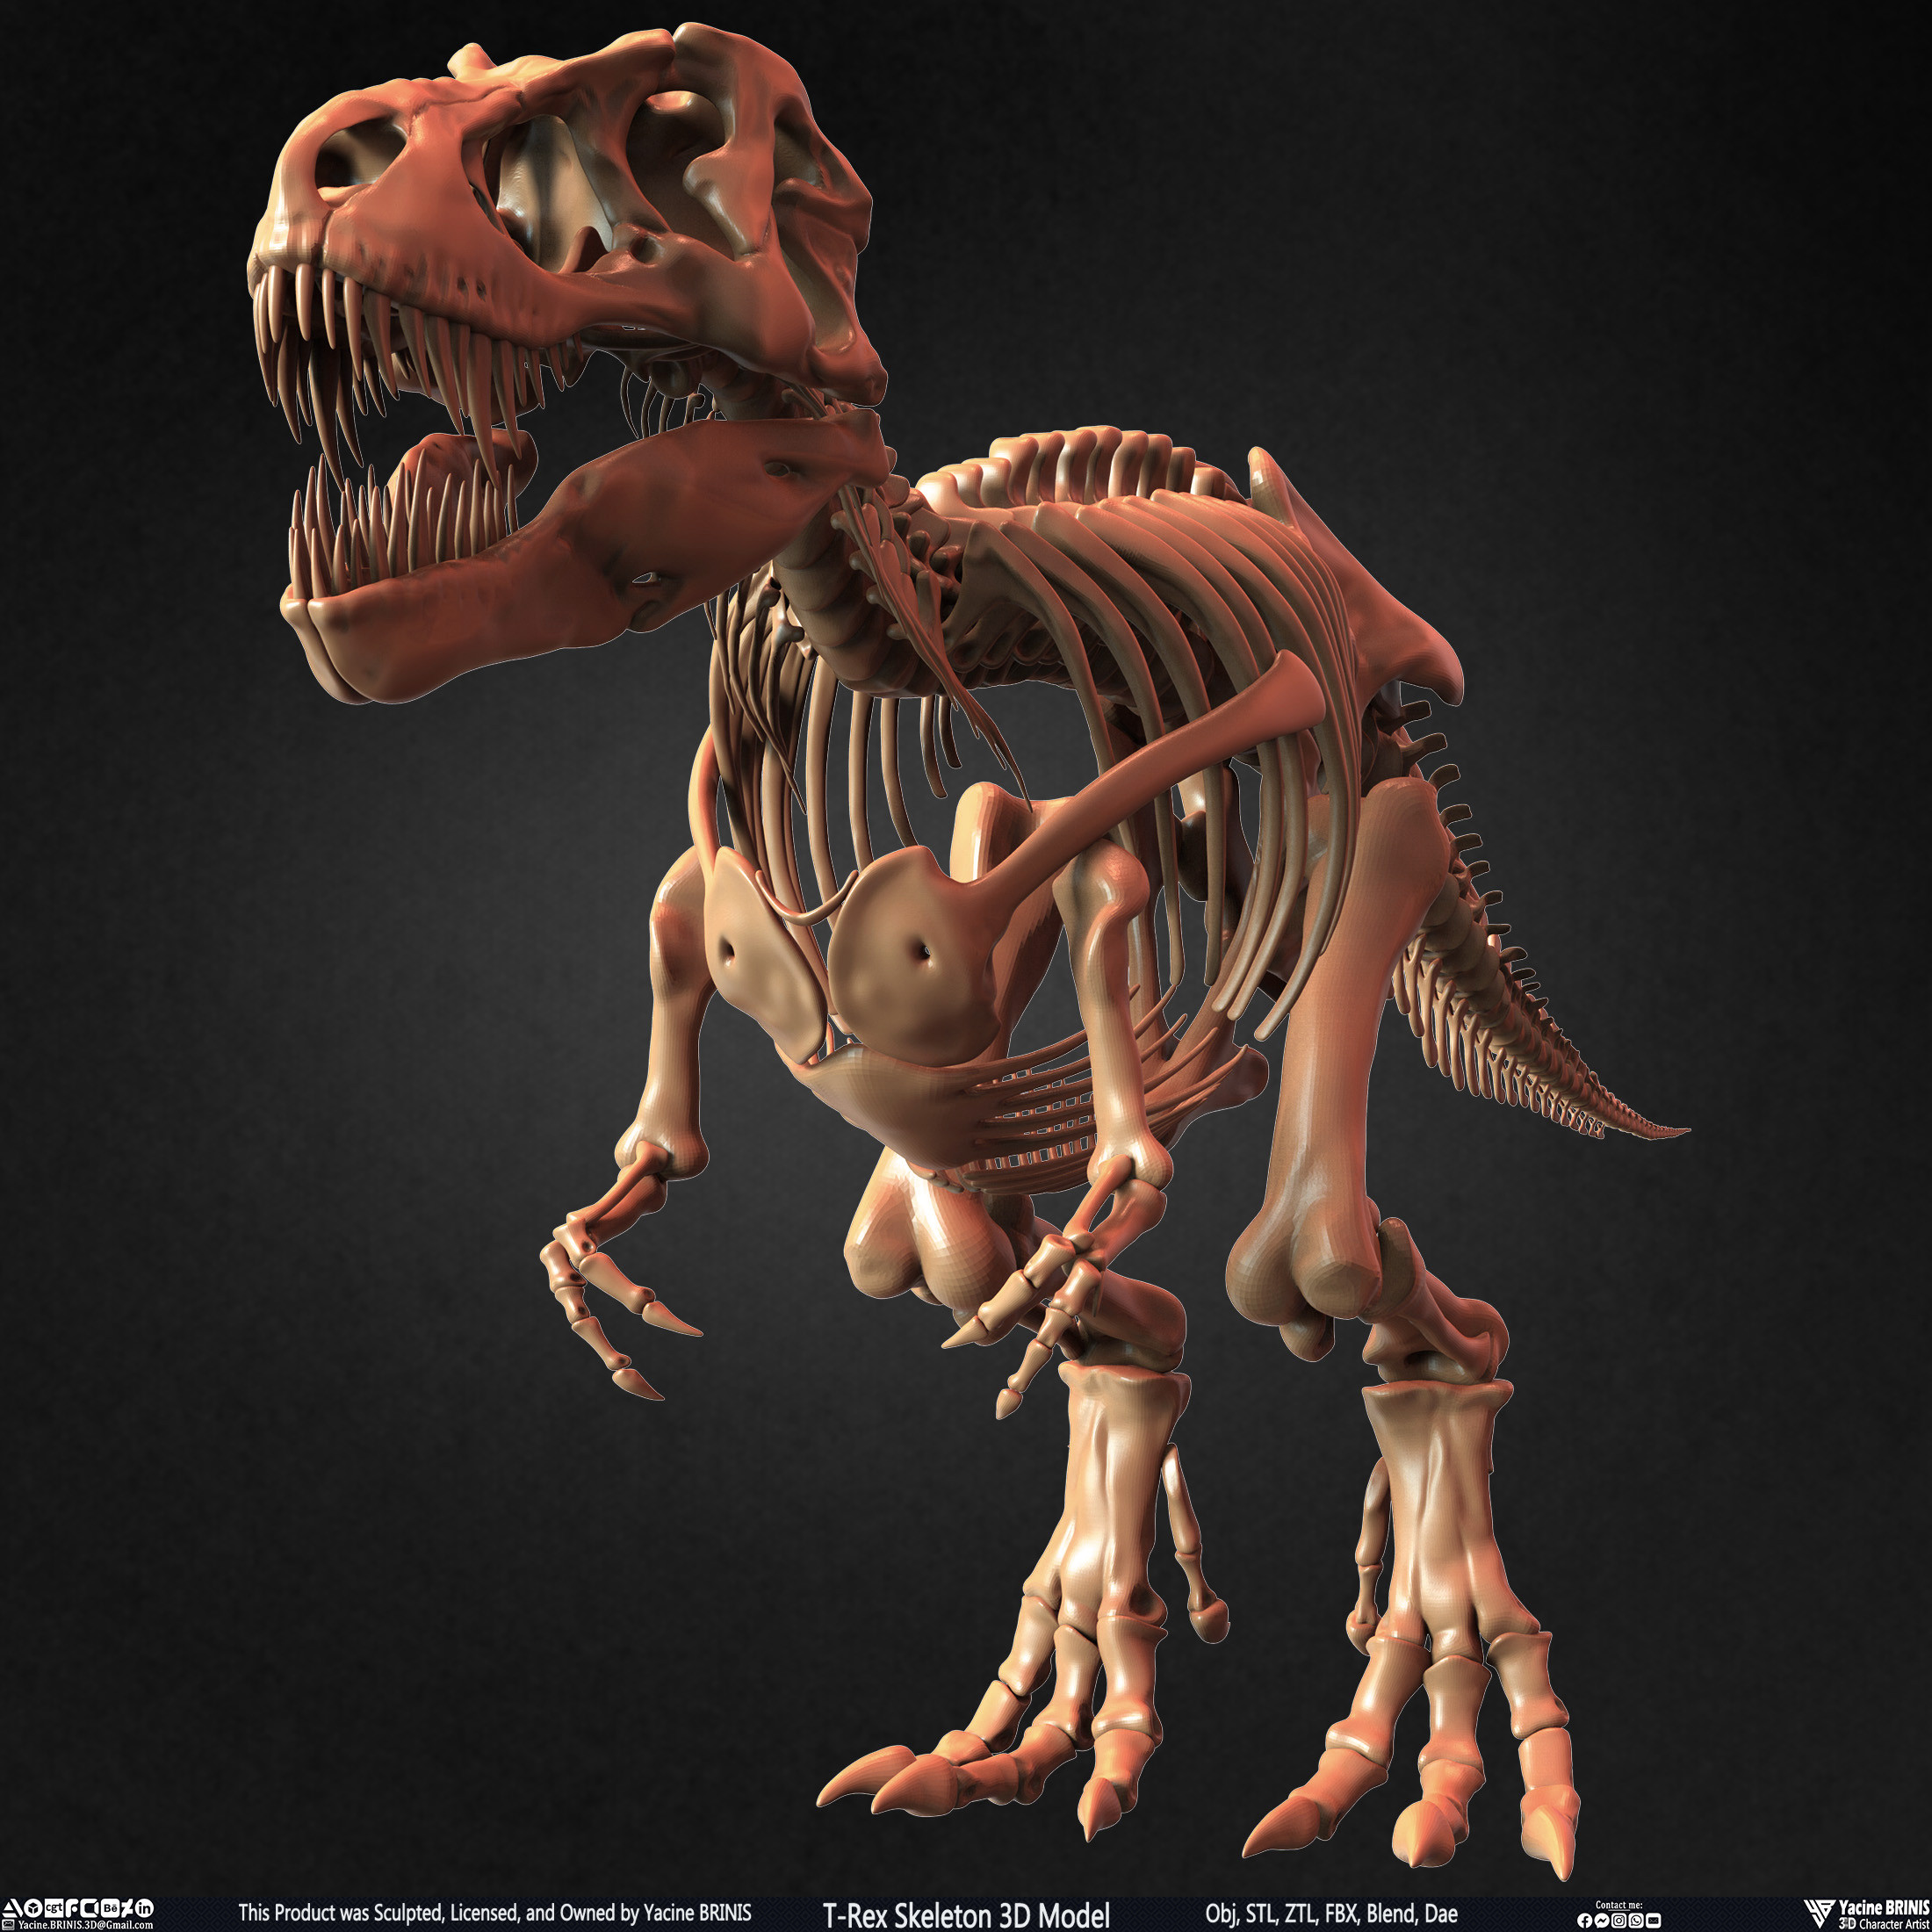 T-Rex Skeleton 3D Model (Tyrannosaurus Rex) Sculpted By Yacine BRINIS Set 013